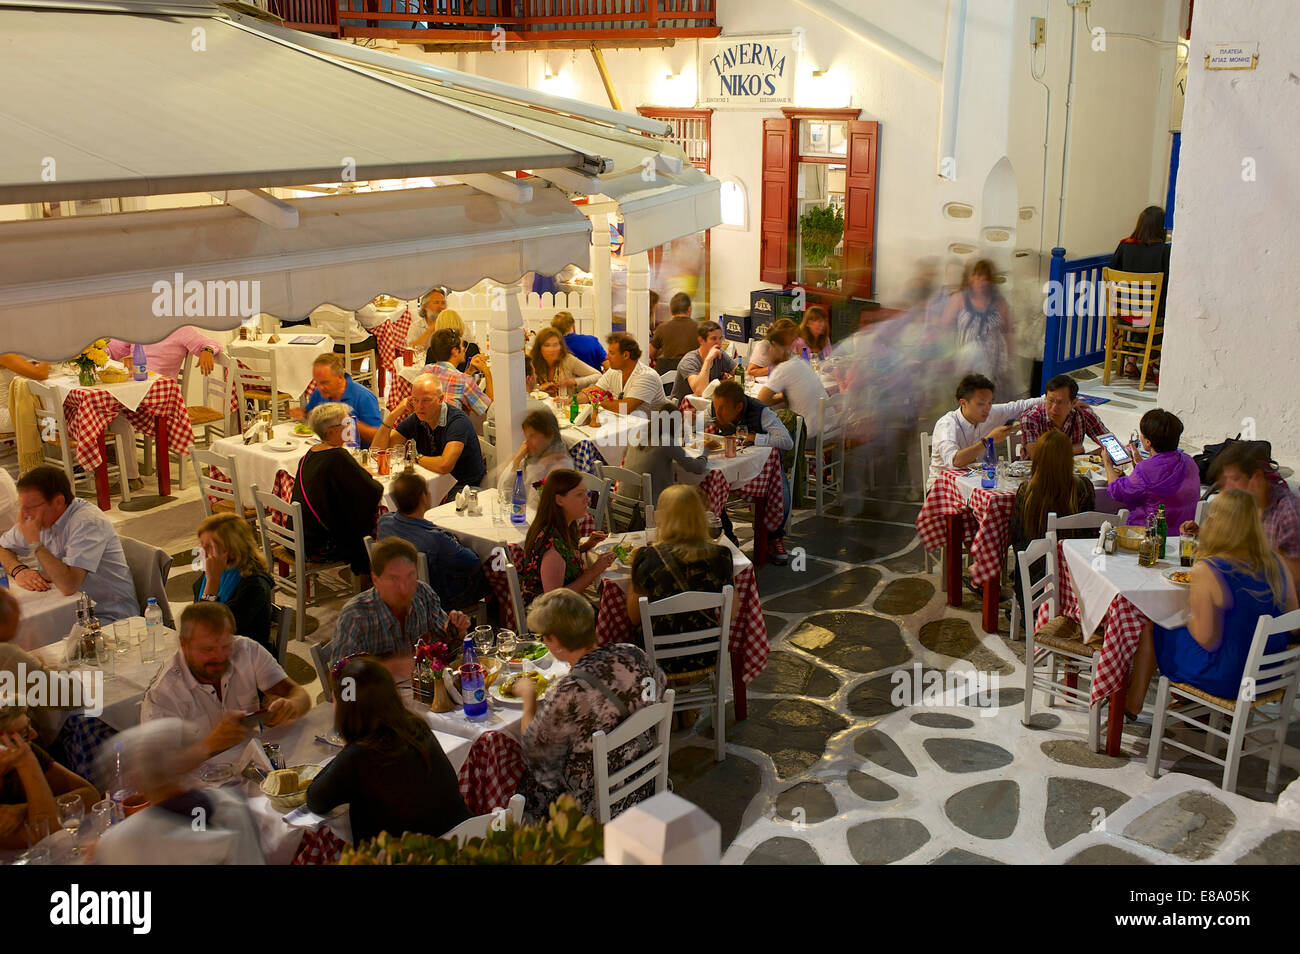 Seafood restaurant "Taverna Nikos", Mykonos Town, Mykonos, Cyclades, Greece  Stock Photo - Alamy